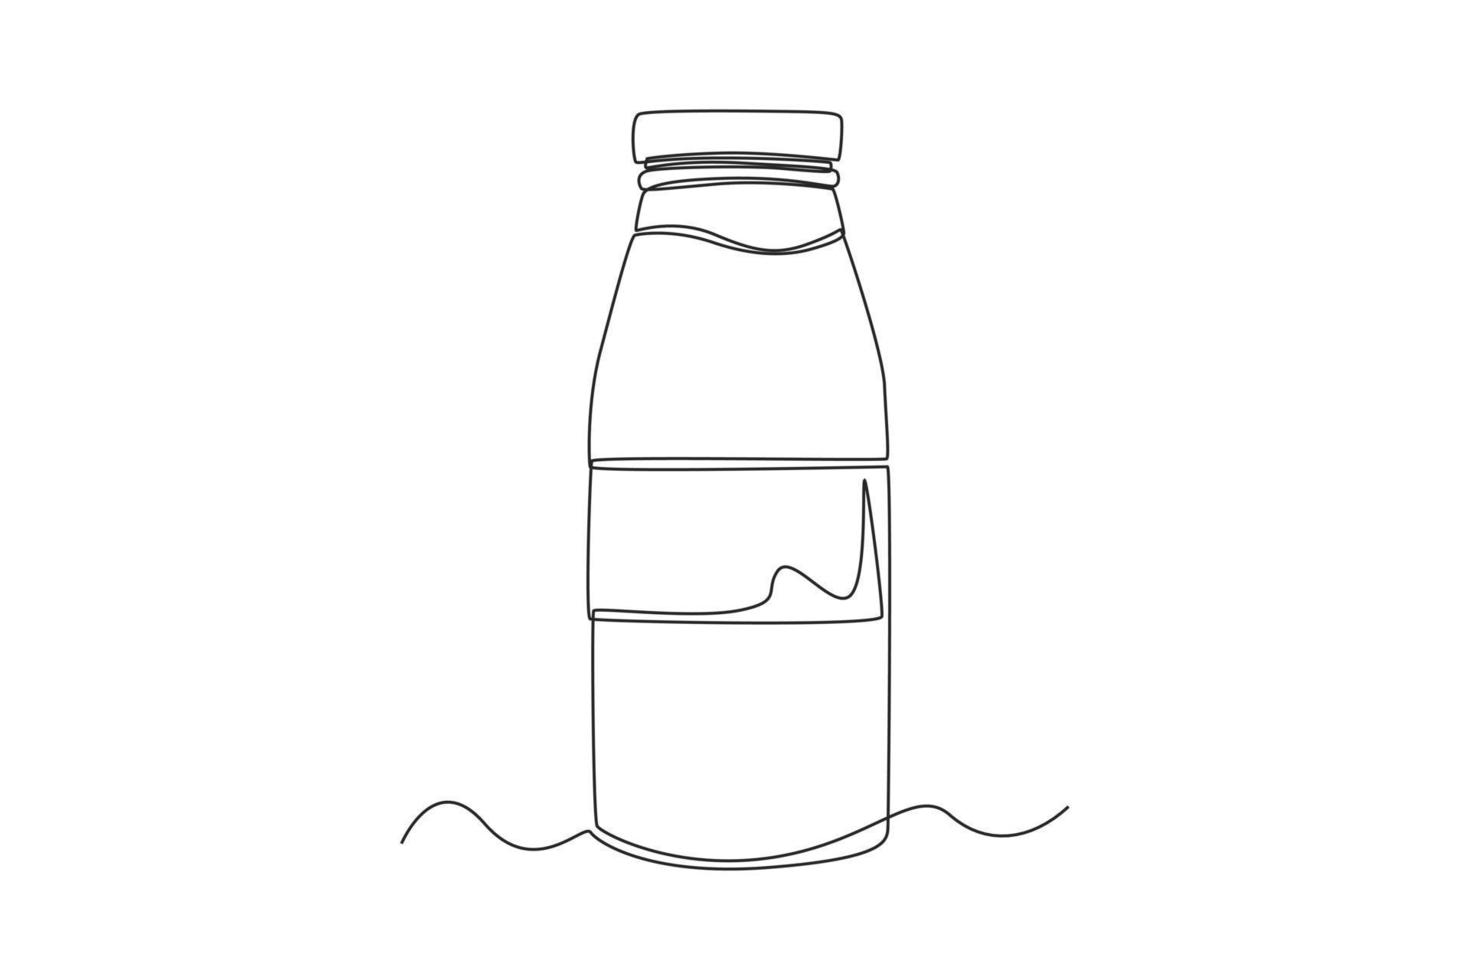 kontinuerlig ett linje teckning en flaska av mjölk. frukost begrepp. enda linje dra design vektor grafisk illustration.